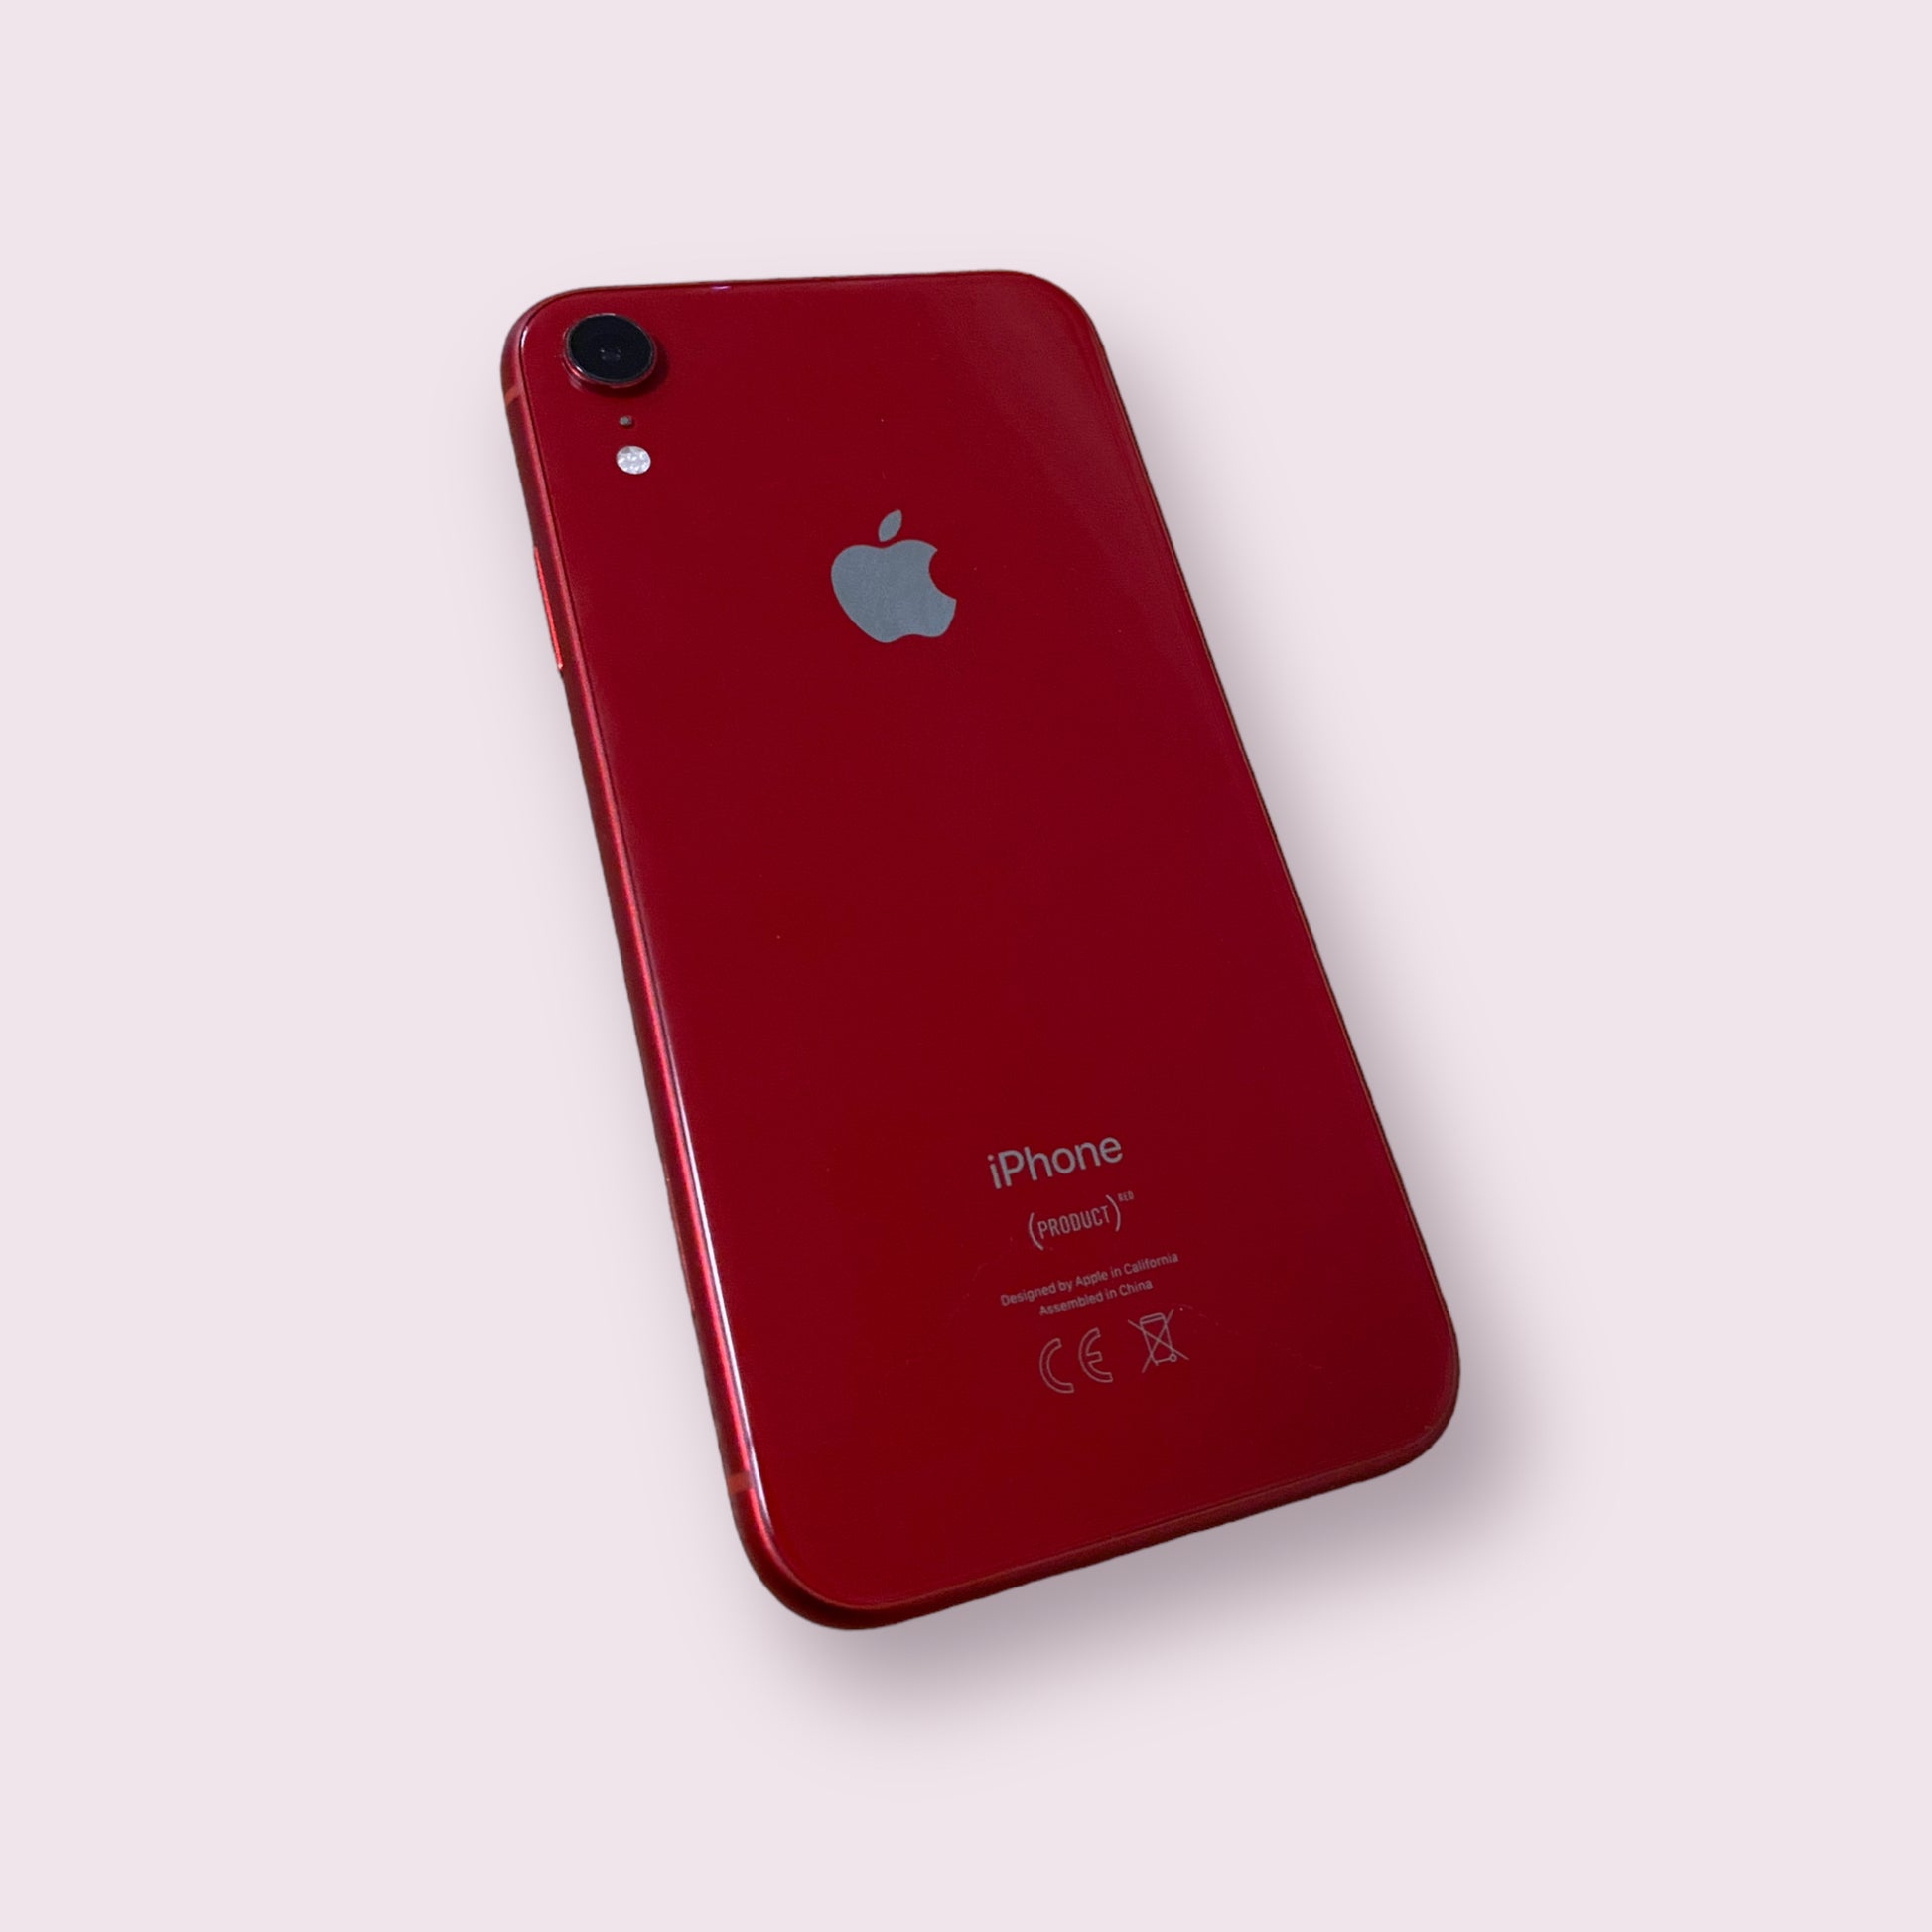 NO FACE ID Apple iPhone XR 64GB Red Unlocked - Grade B – Pratts